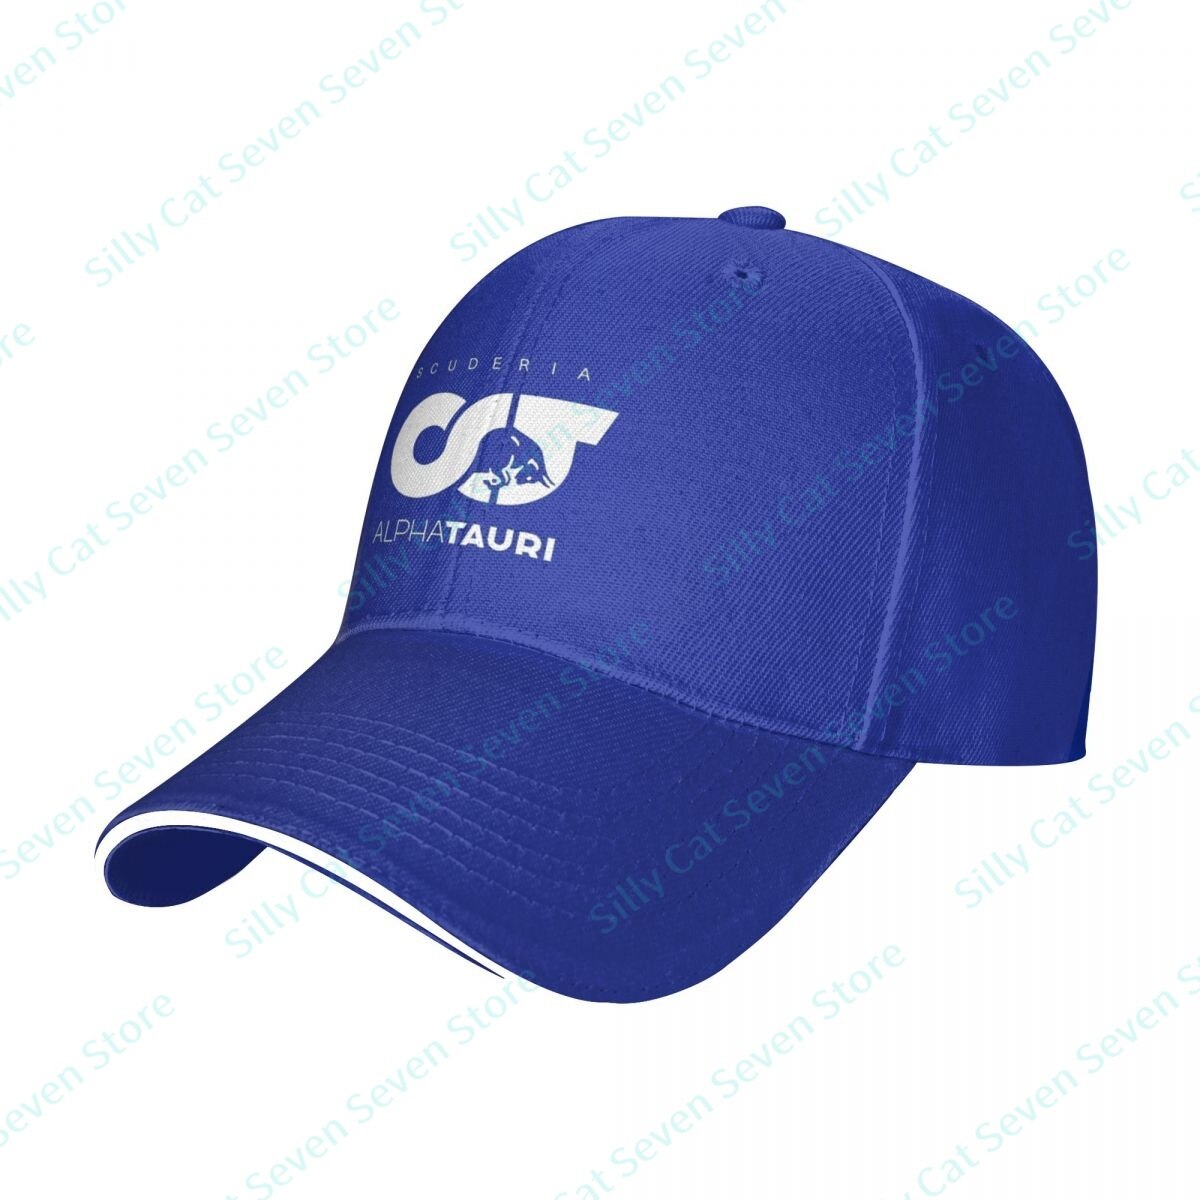 Scuderia Alpha Tauri Unisex Hat Adult Adjustable Baseball Cap